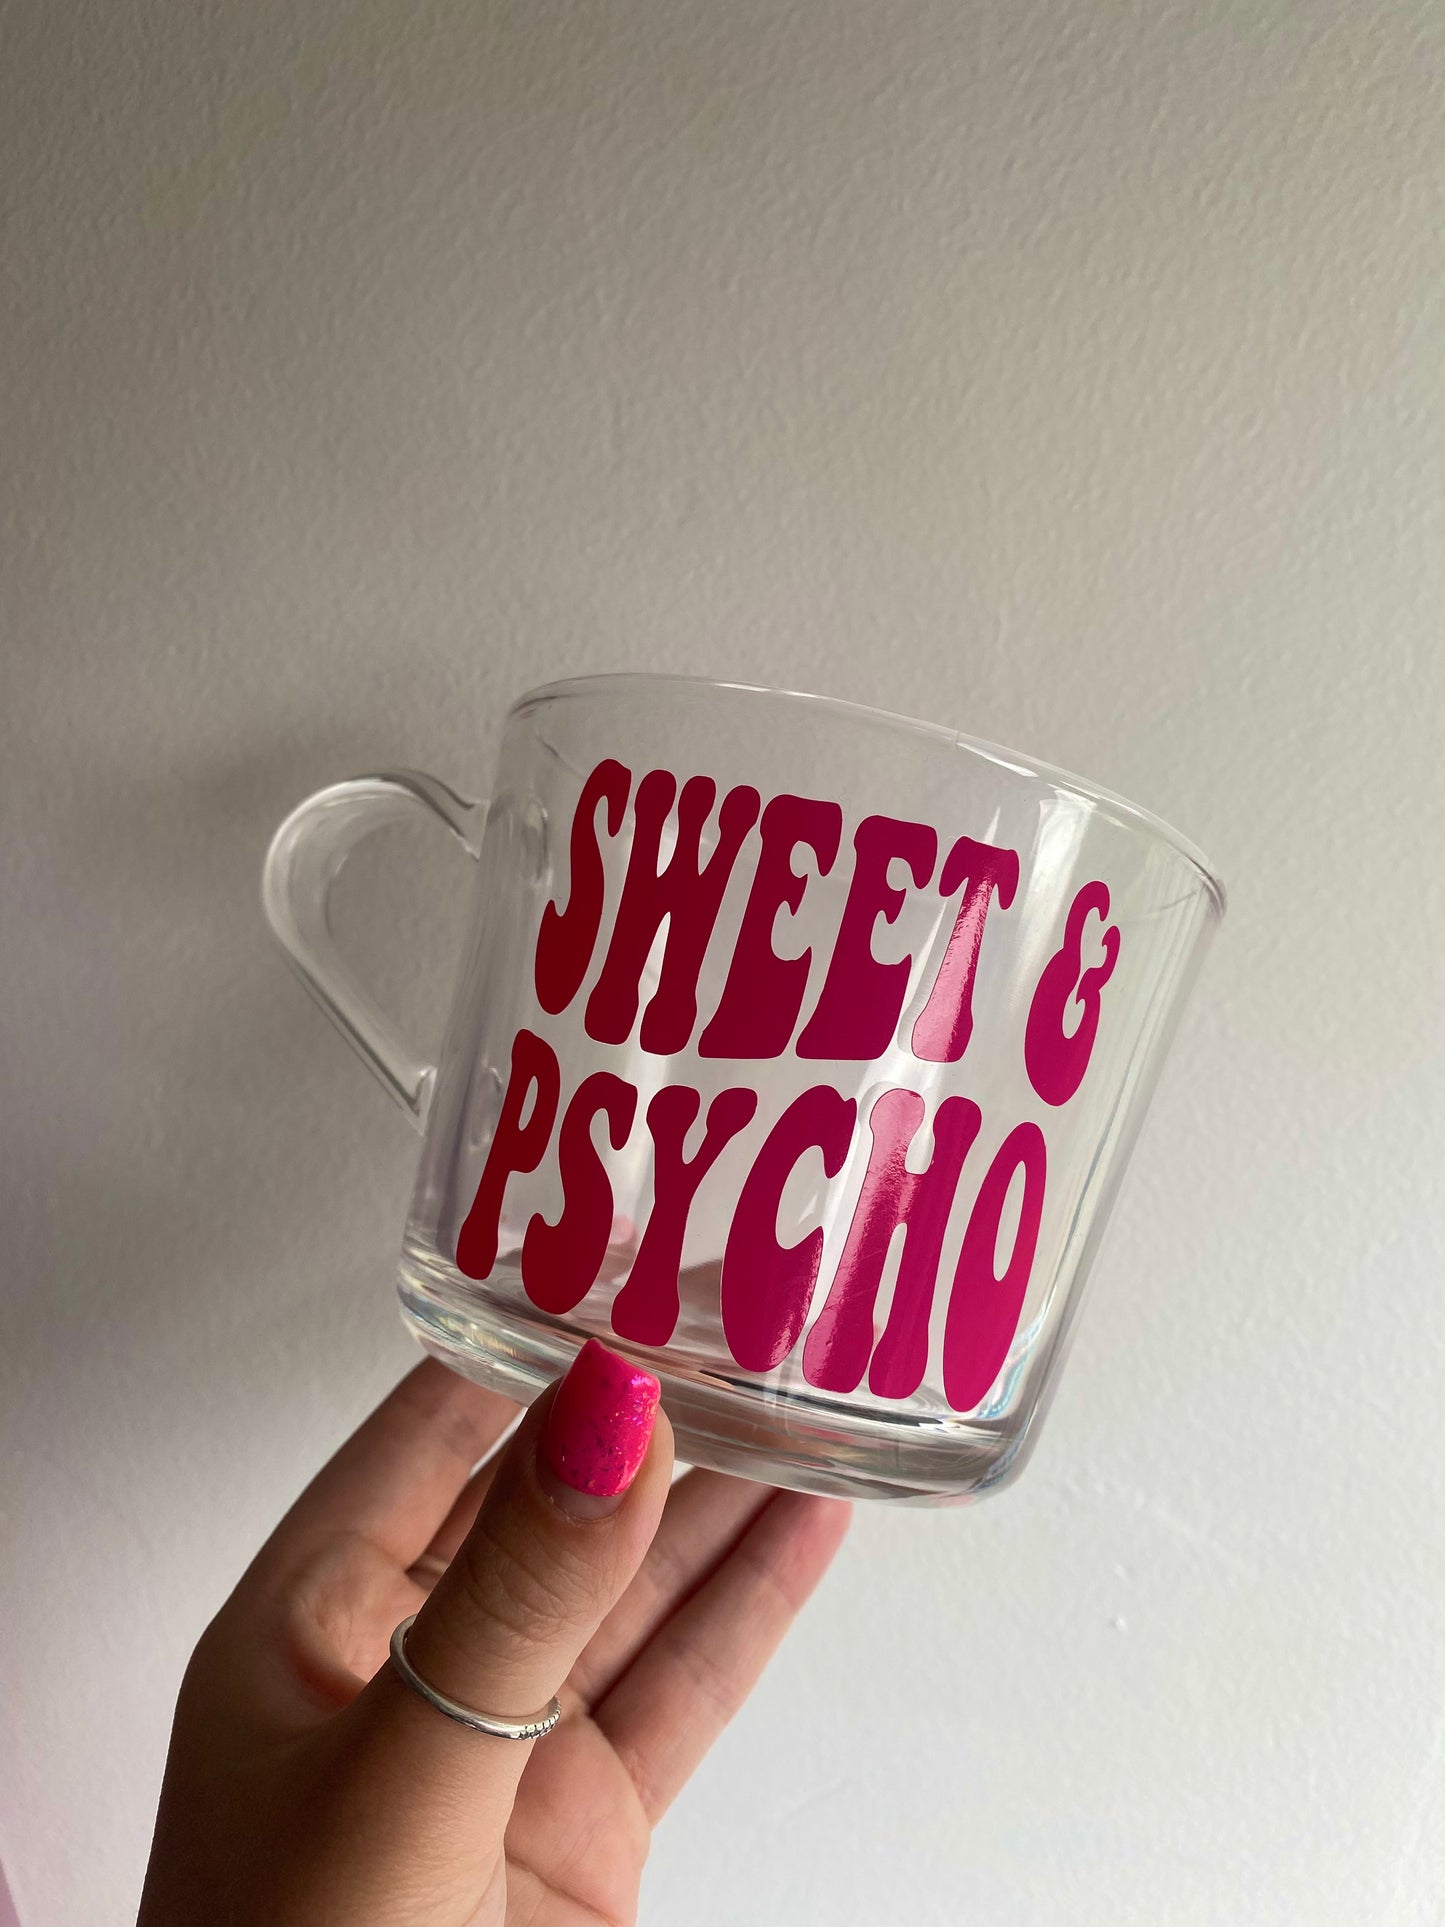 Sweet & Psycho Mug